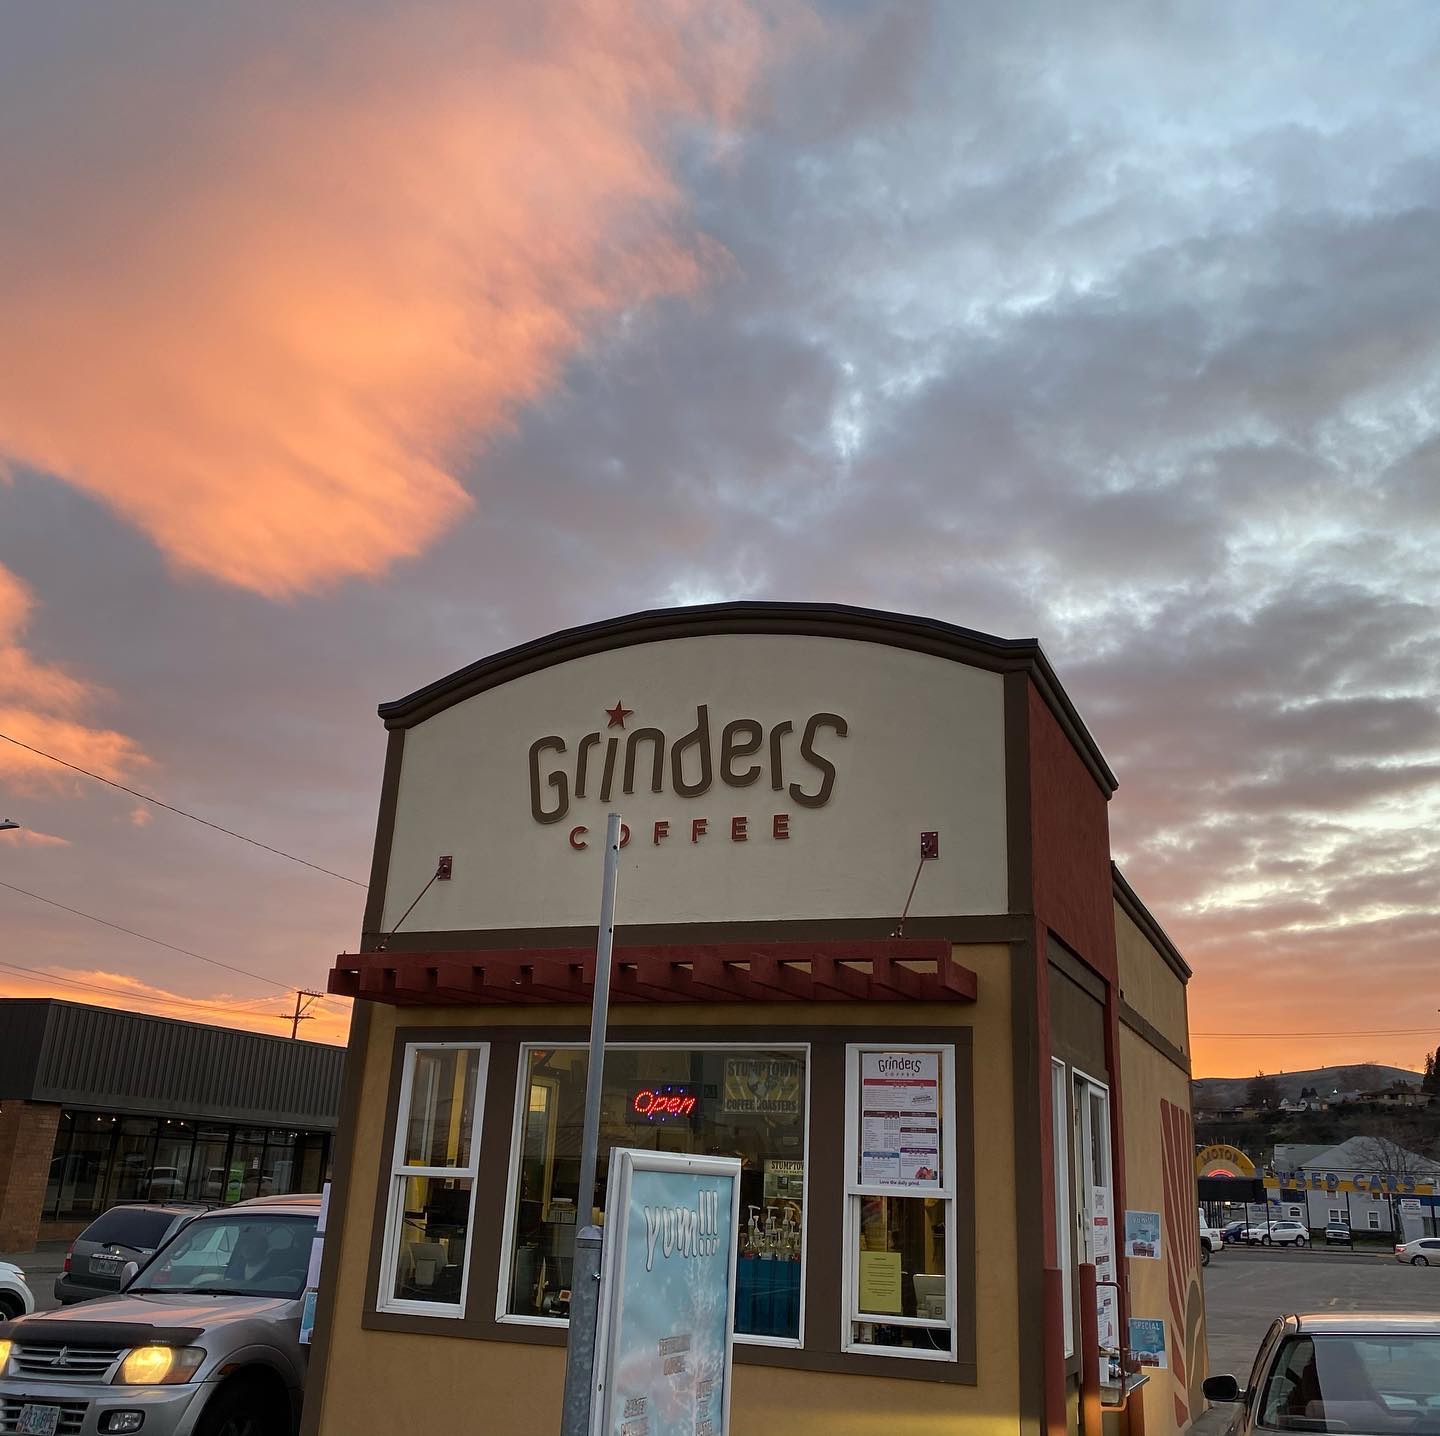 Sunrise over Grinder Coffee